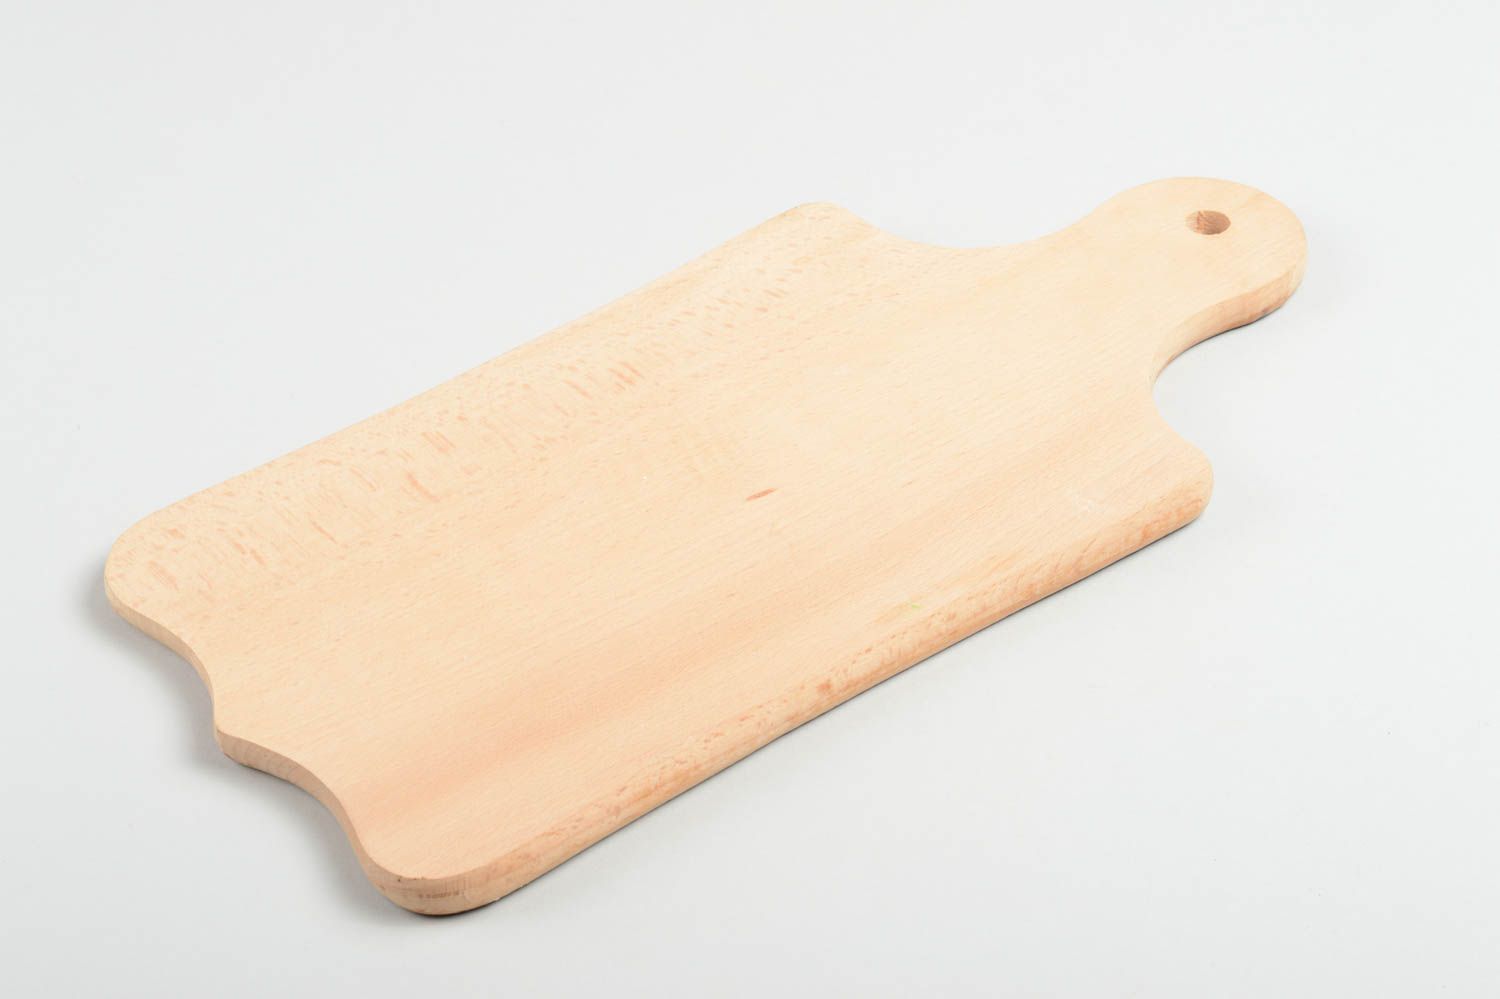 Unusual handmade cutting board designer accessories stylish decorative use only photo 4